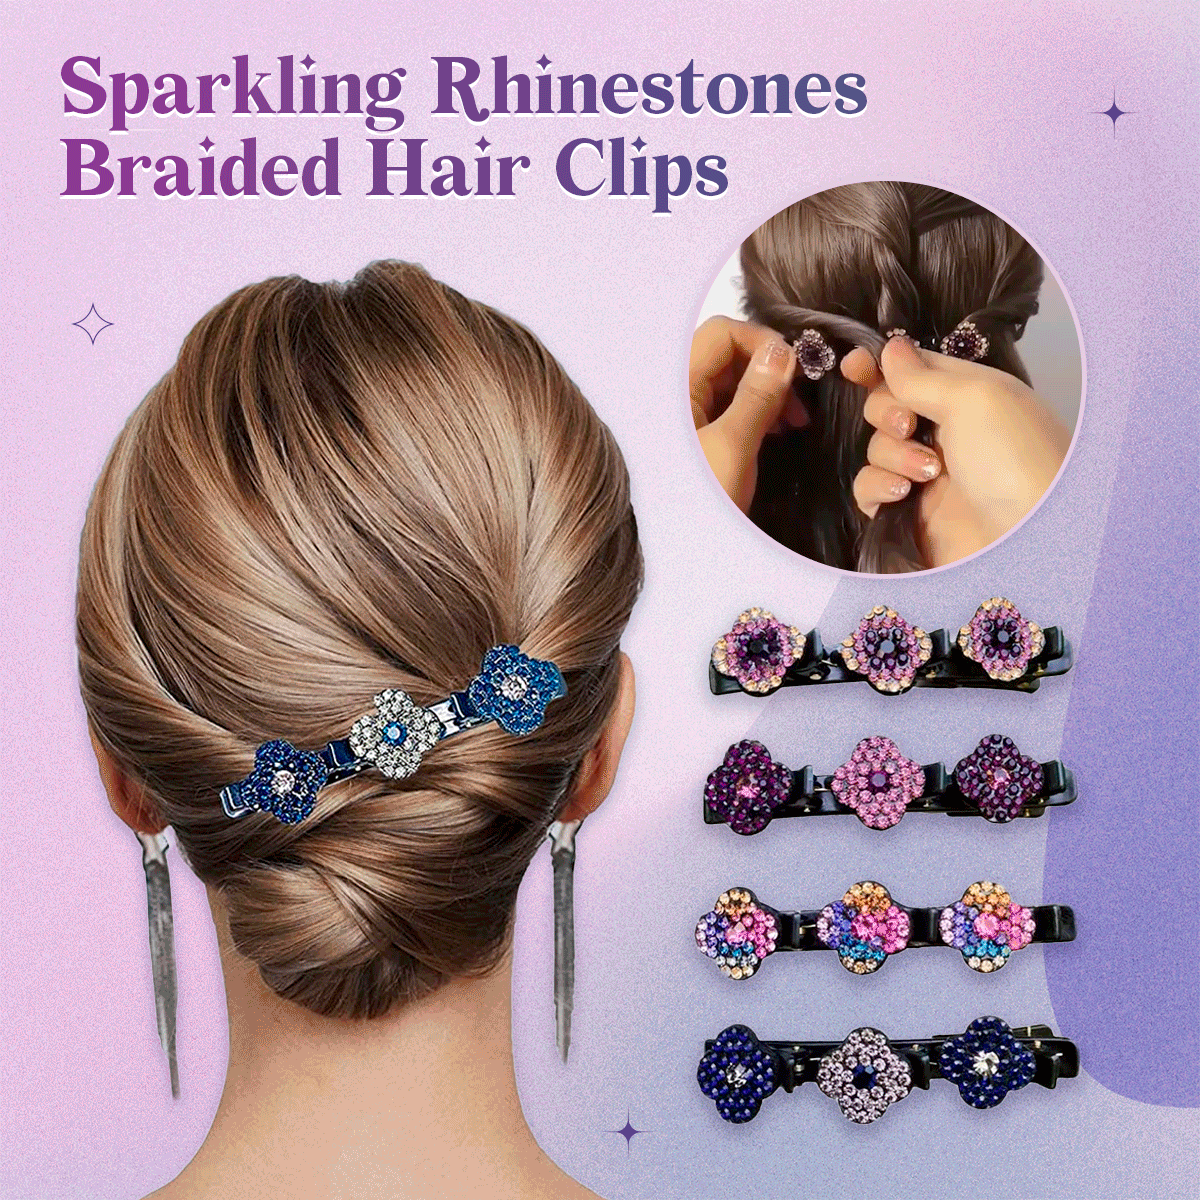 Sparkling Rhinestones Braided Hair Clips